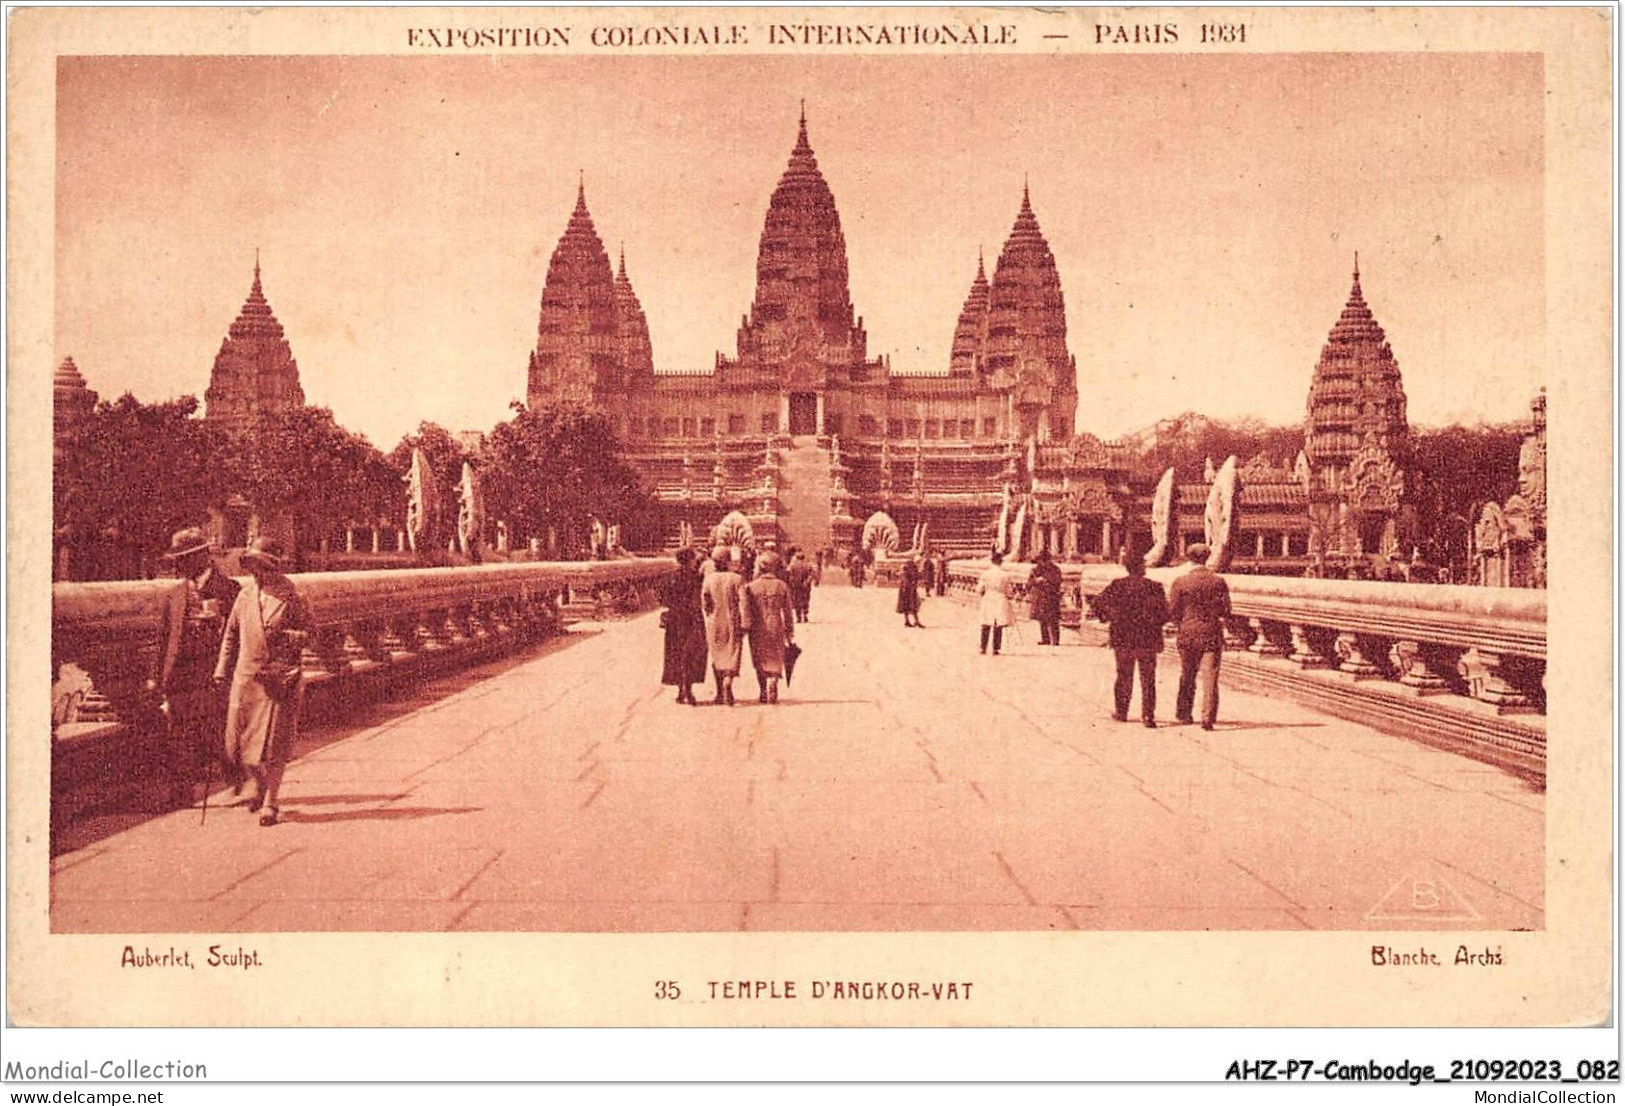 AHZP7-CAMBODGE-0637 - EXPOSITION COLONIALE INTERNATIONALE - PARIS 1931 - TEMPLE D'ANGKOR-VAT - Cambodja